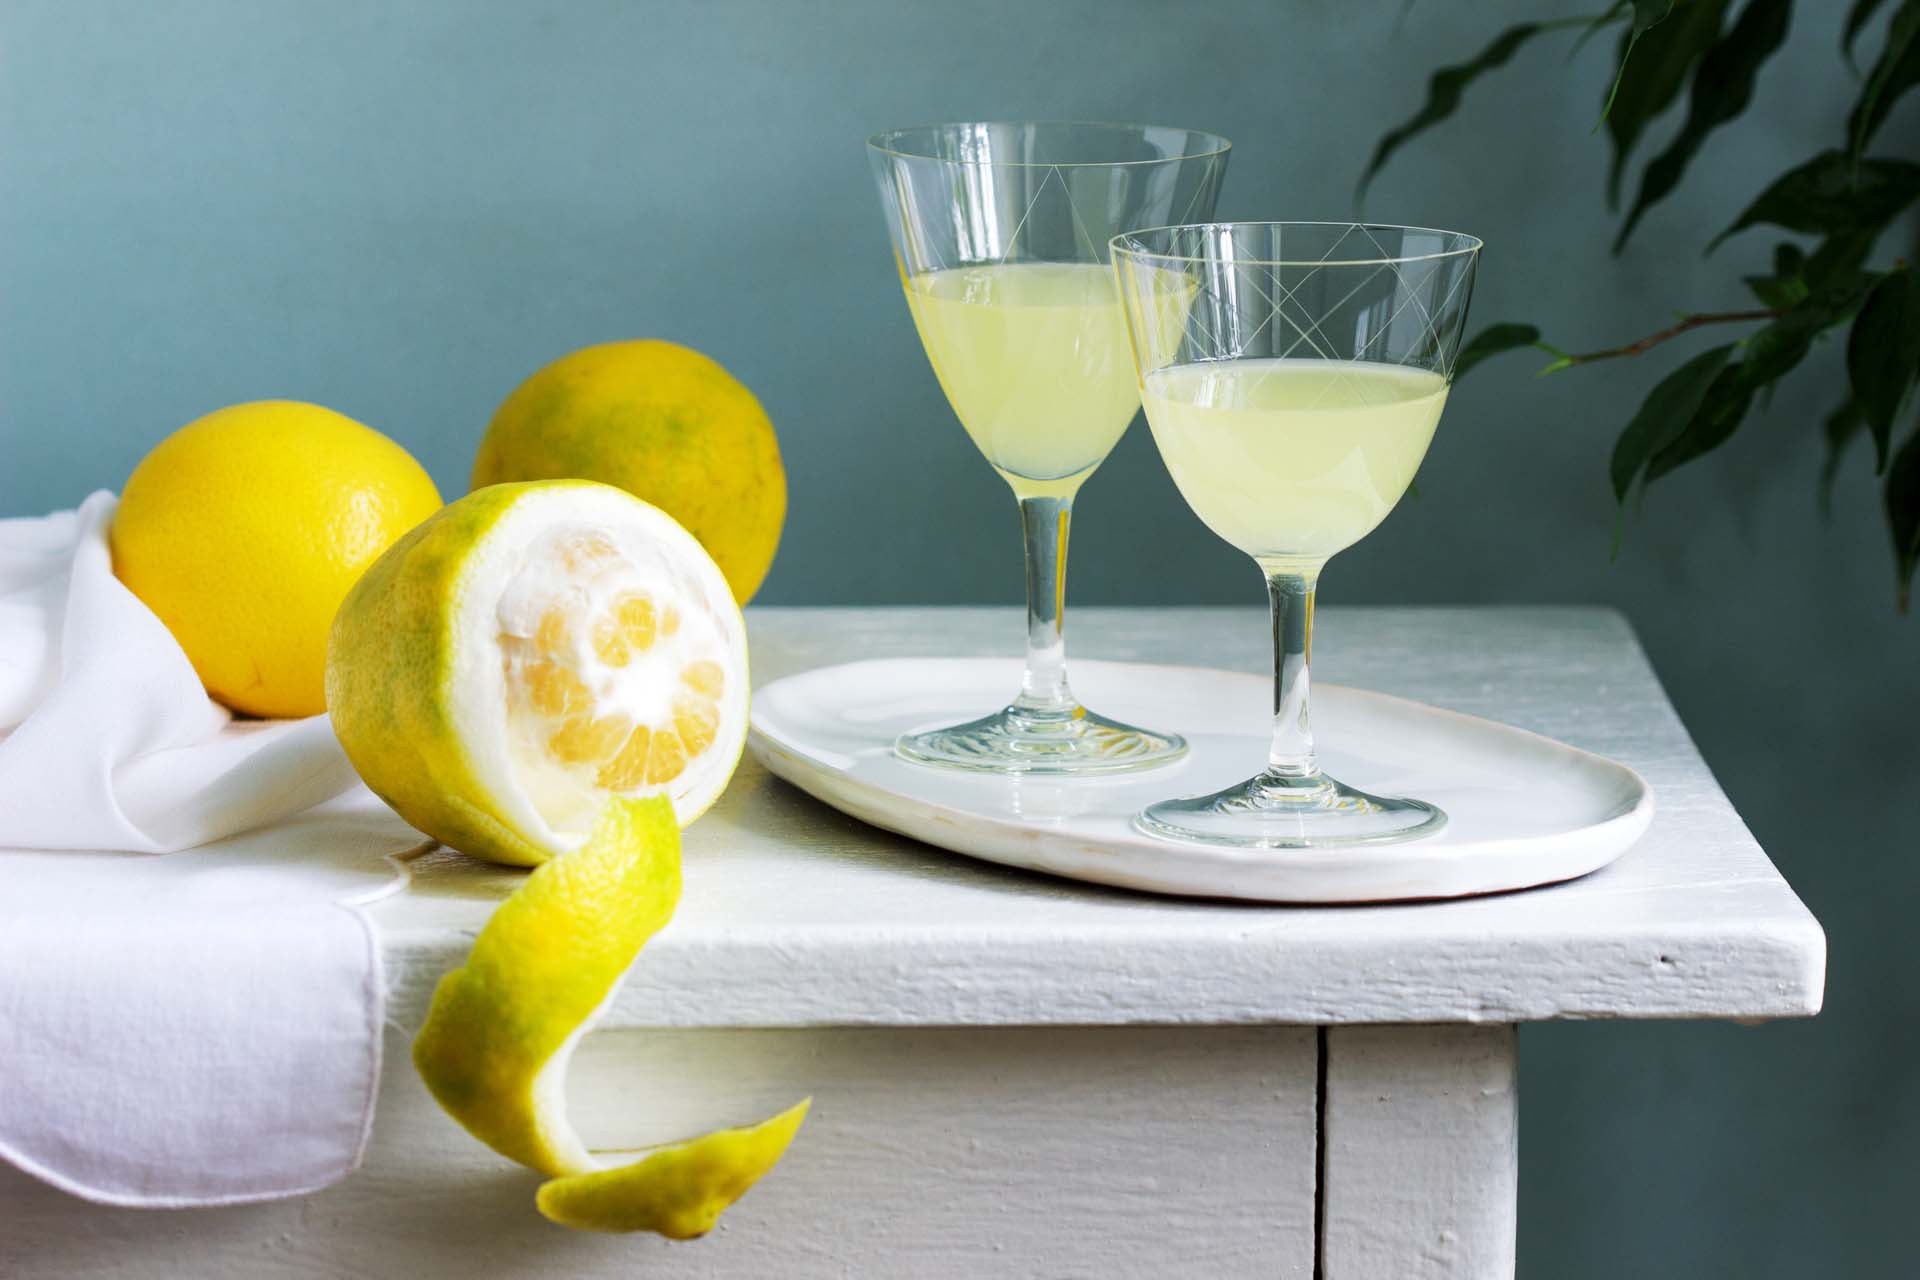 A half peeled lemon and two glasses of lemon juice